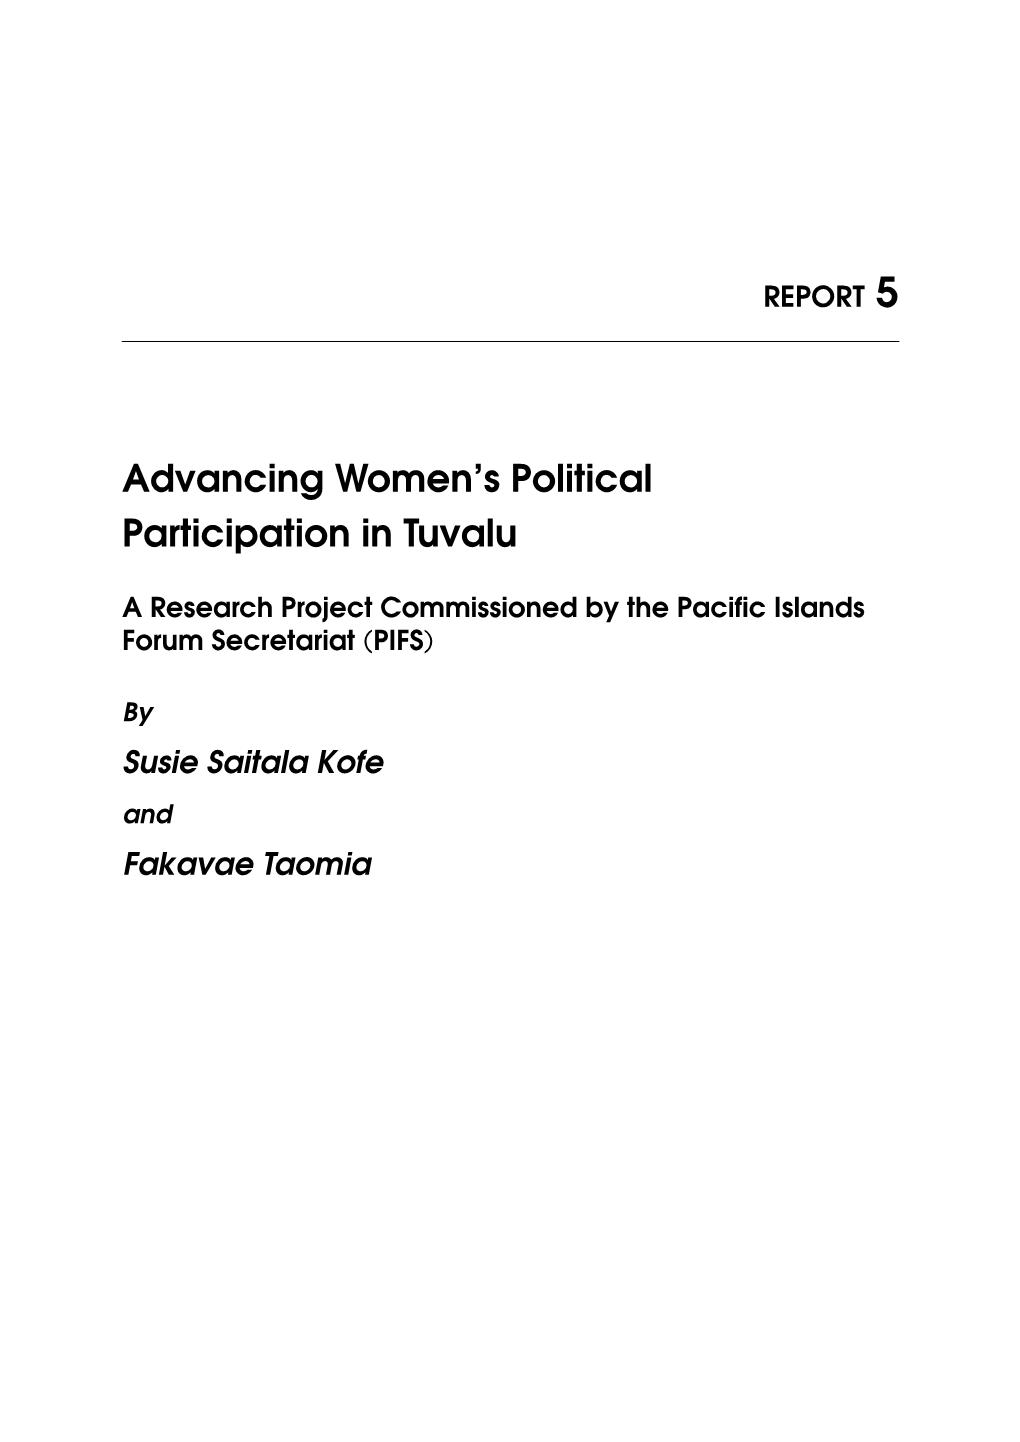 Advancing Women's Political Participation in Tuvalu